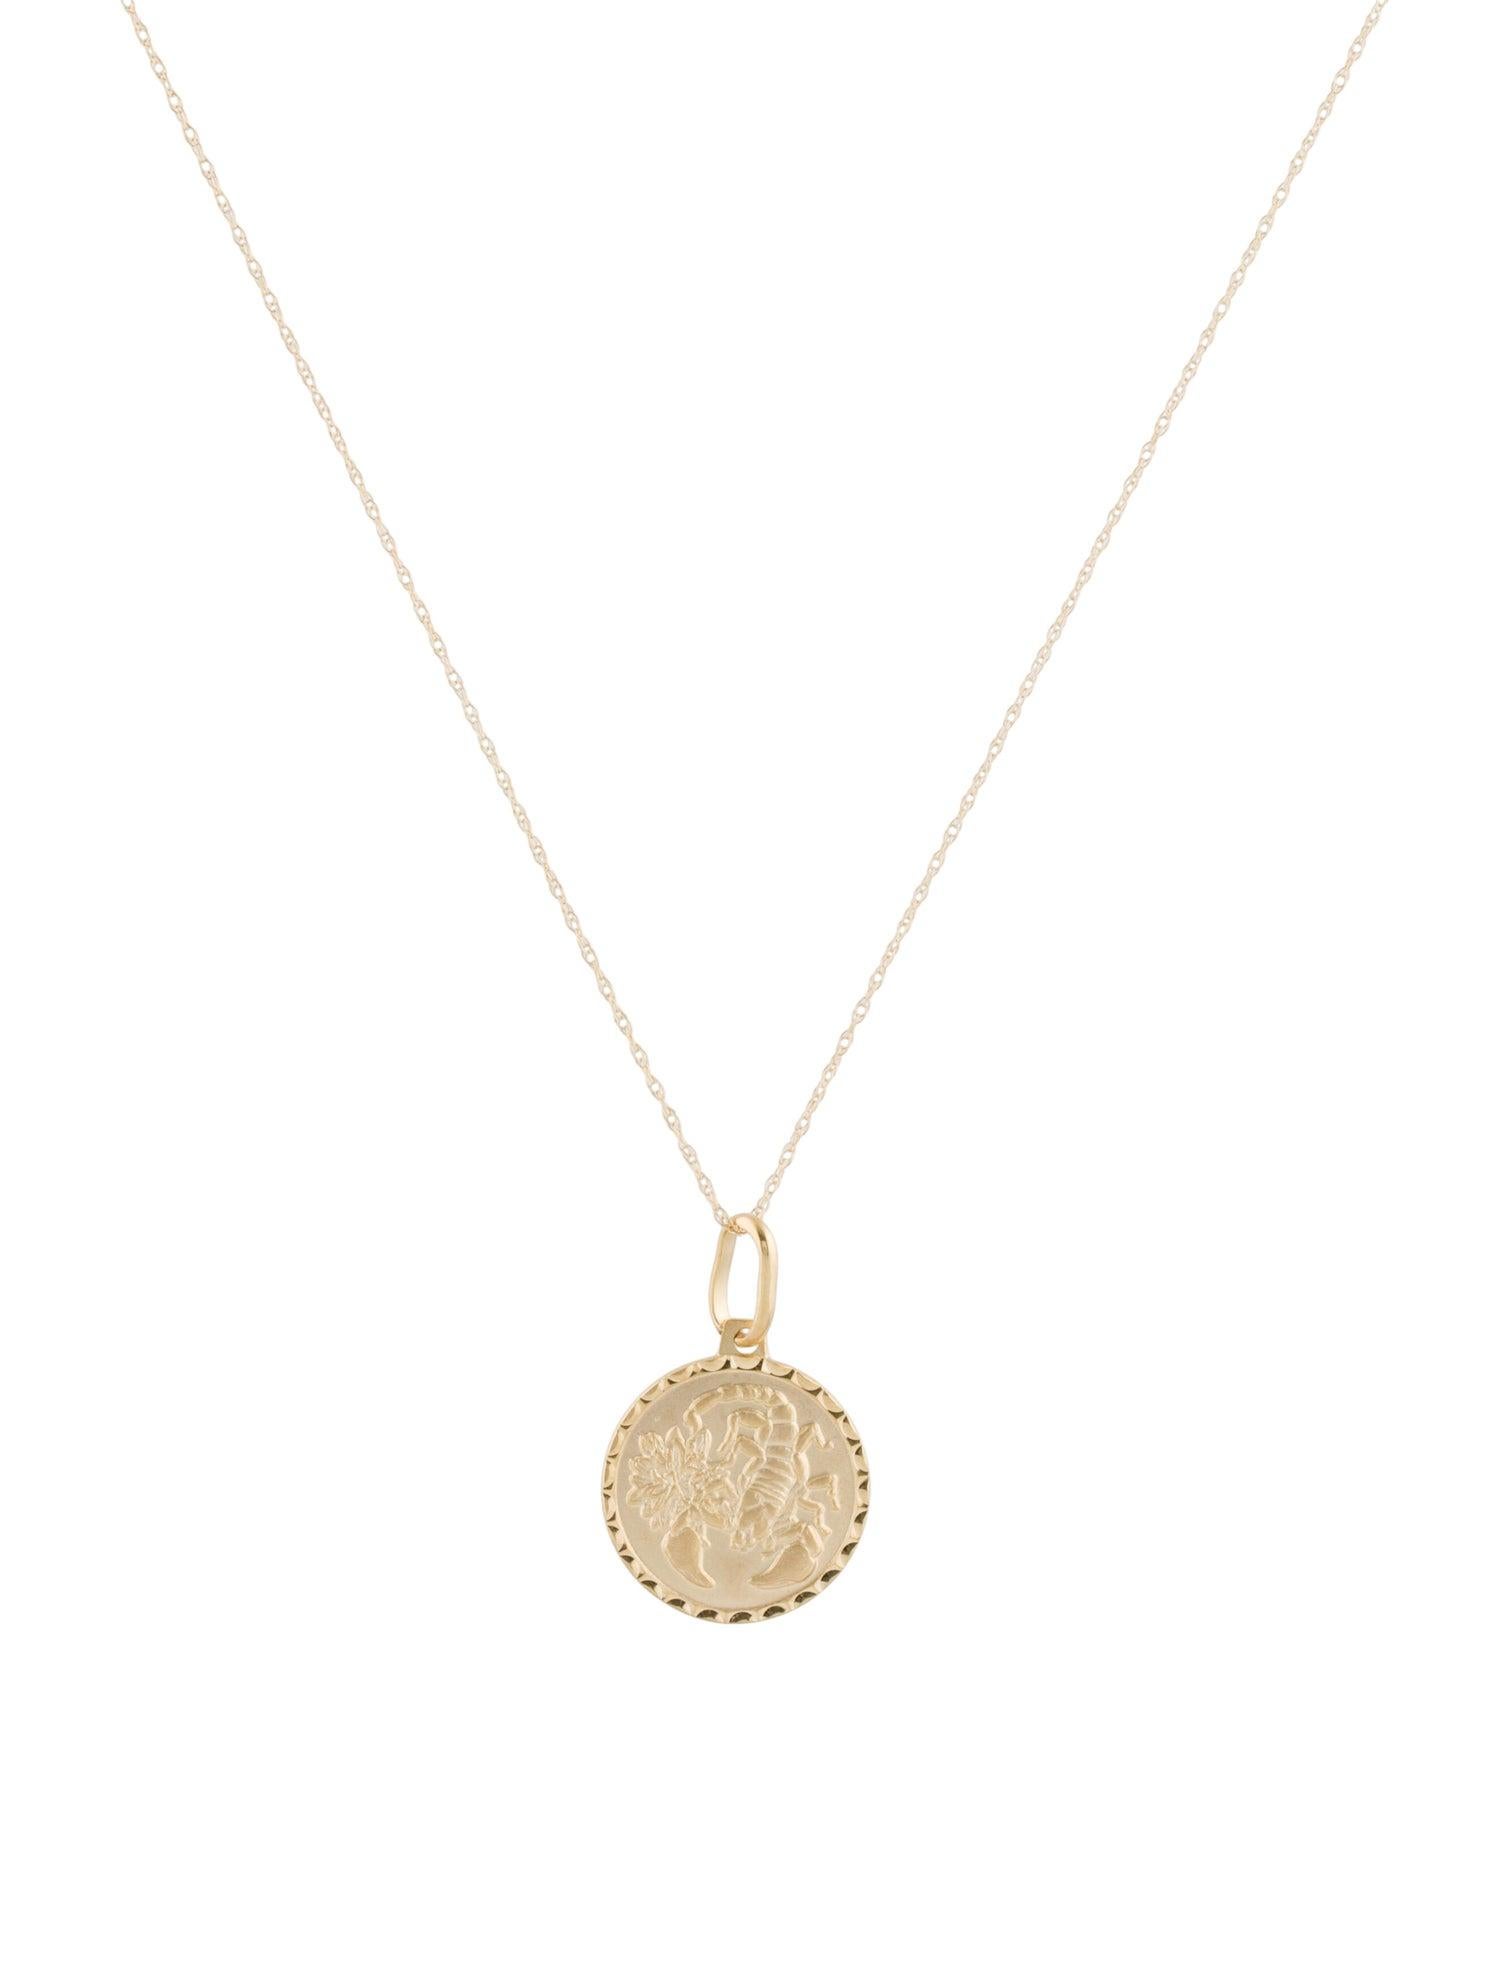 9ct gold zodiac necklace